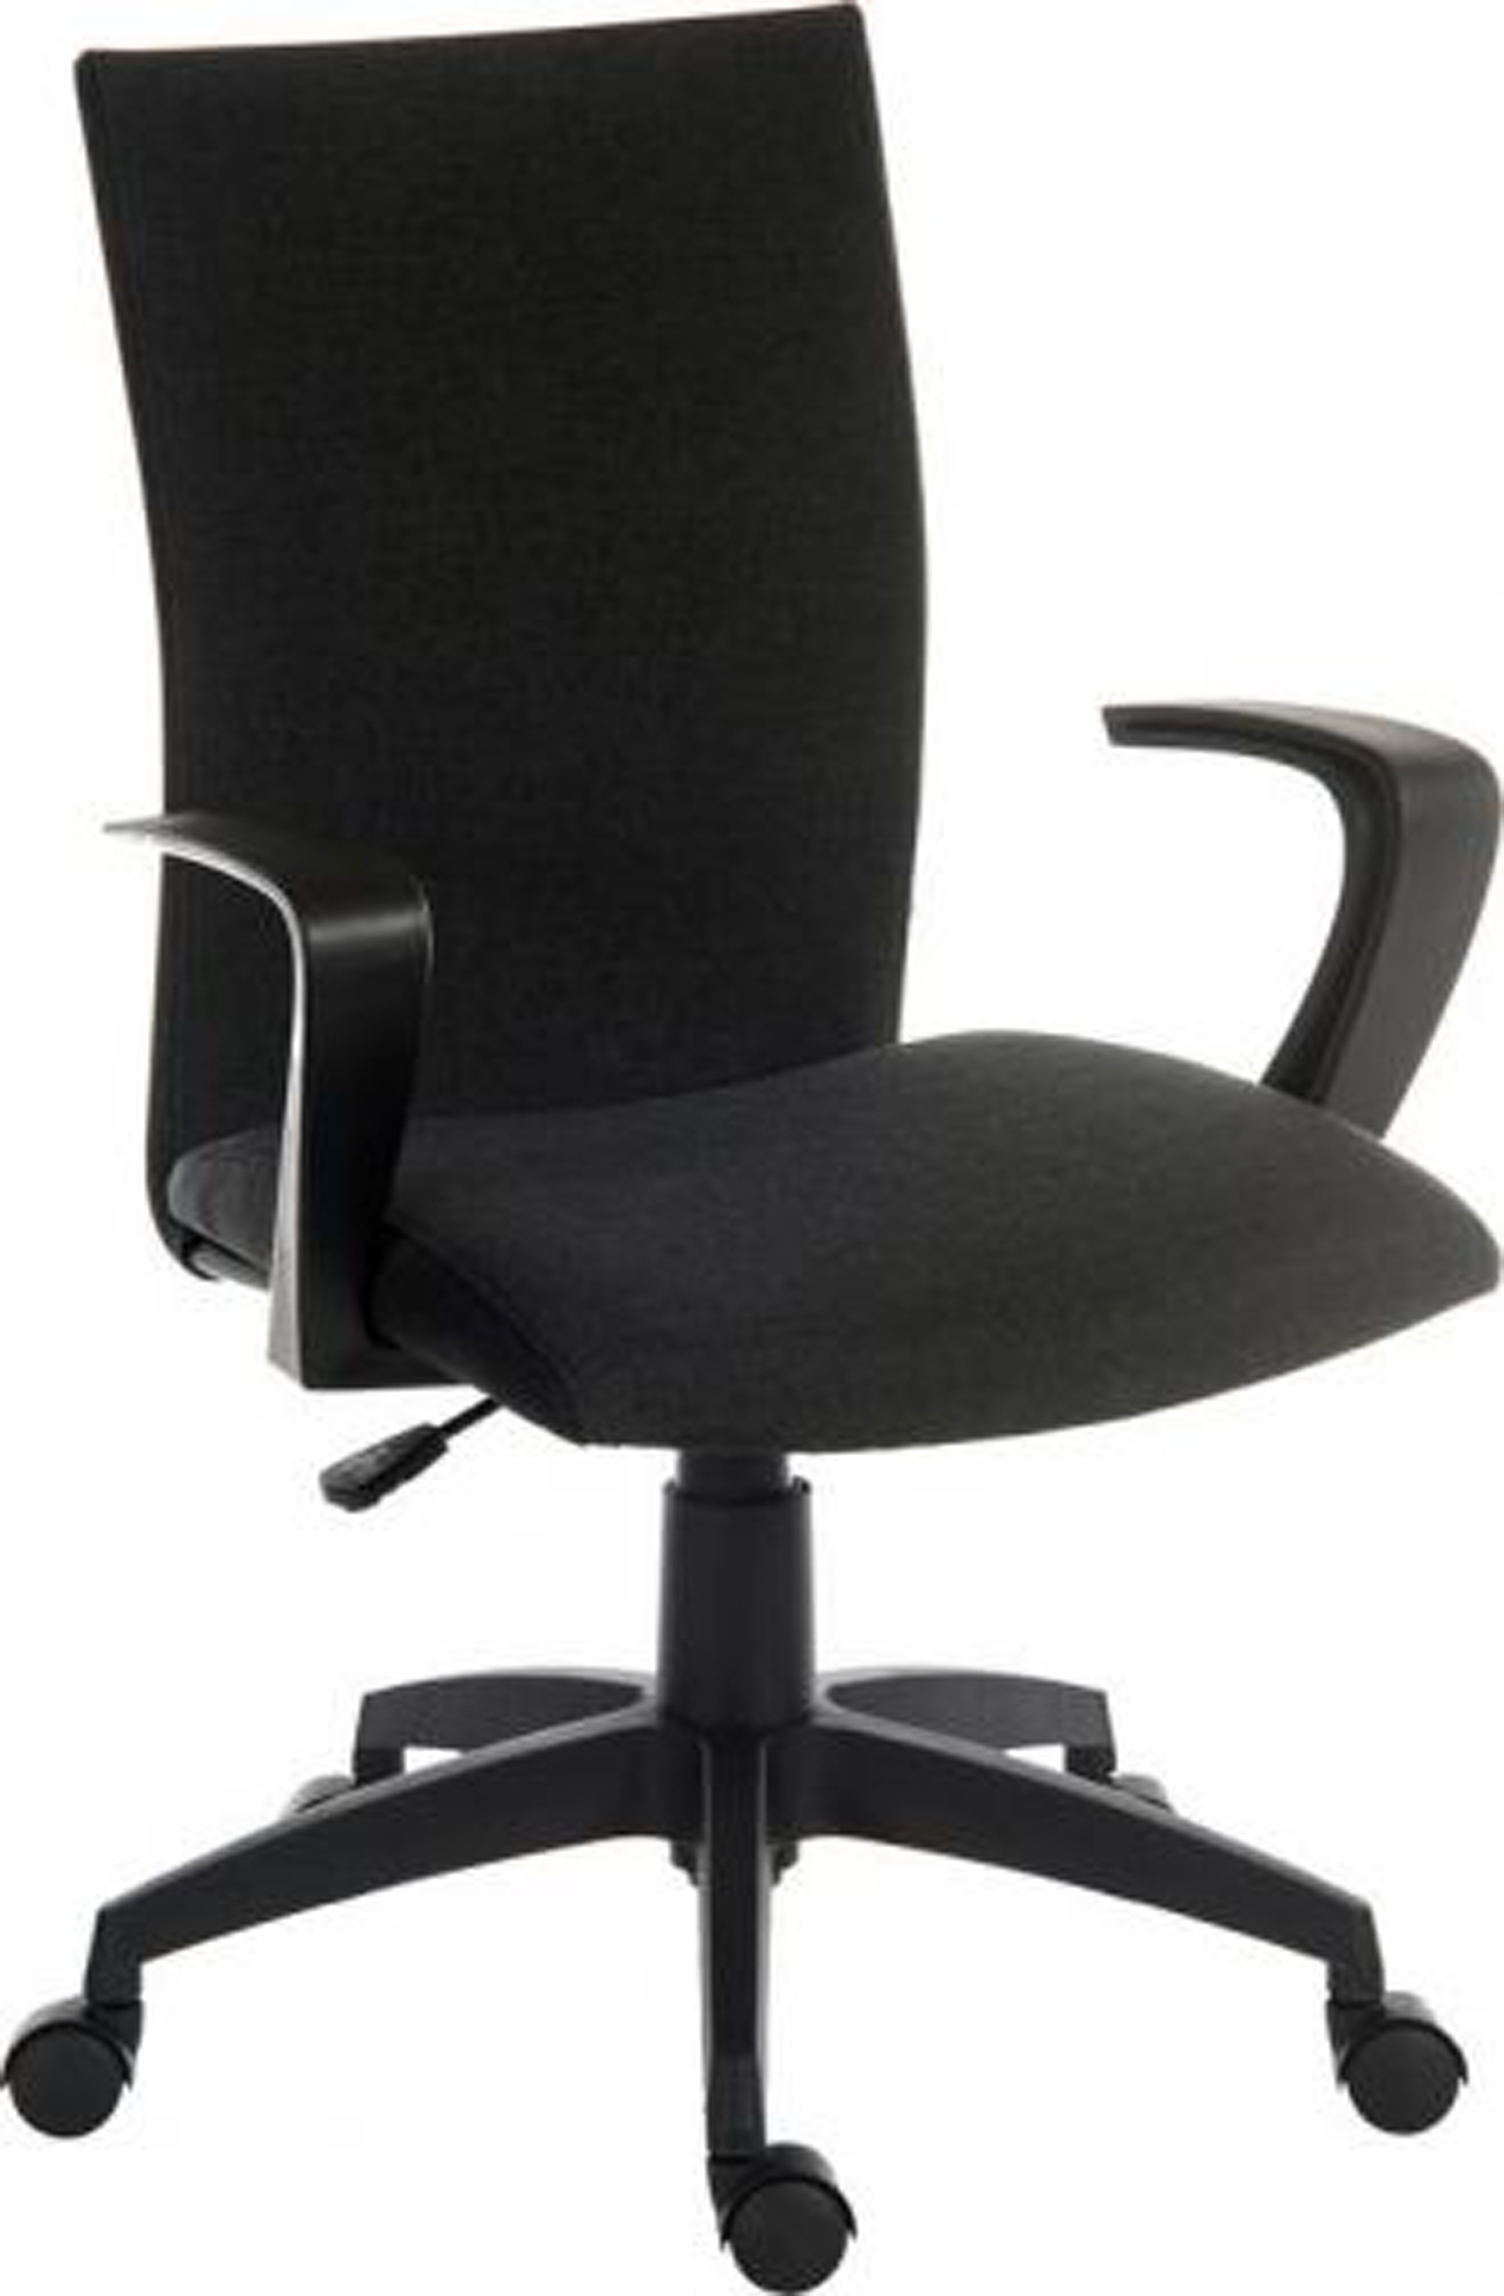 Student Work Chair - Black